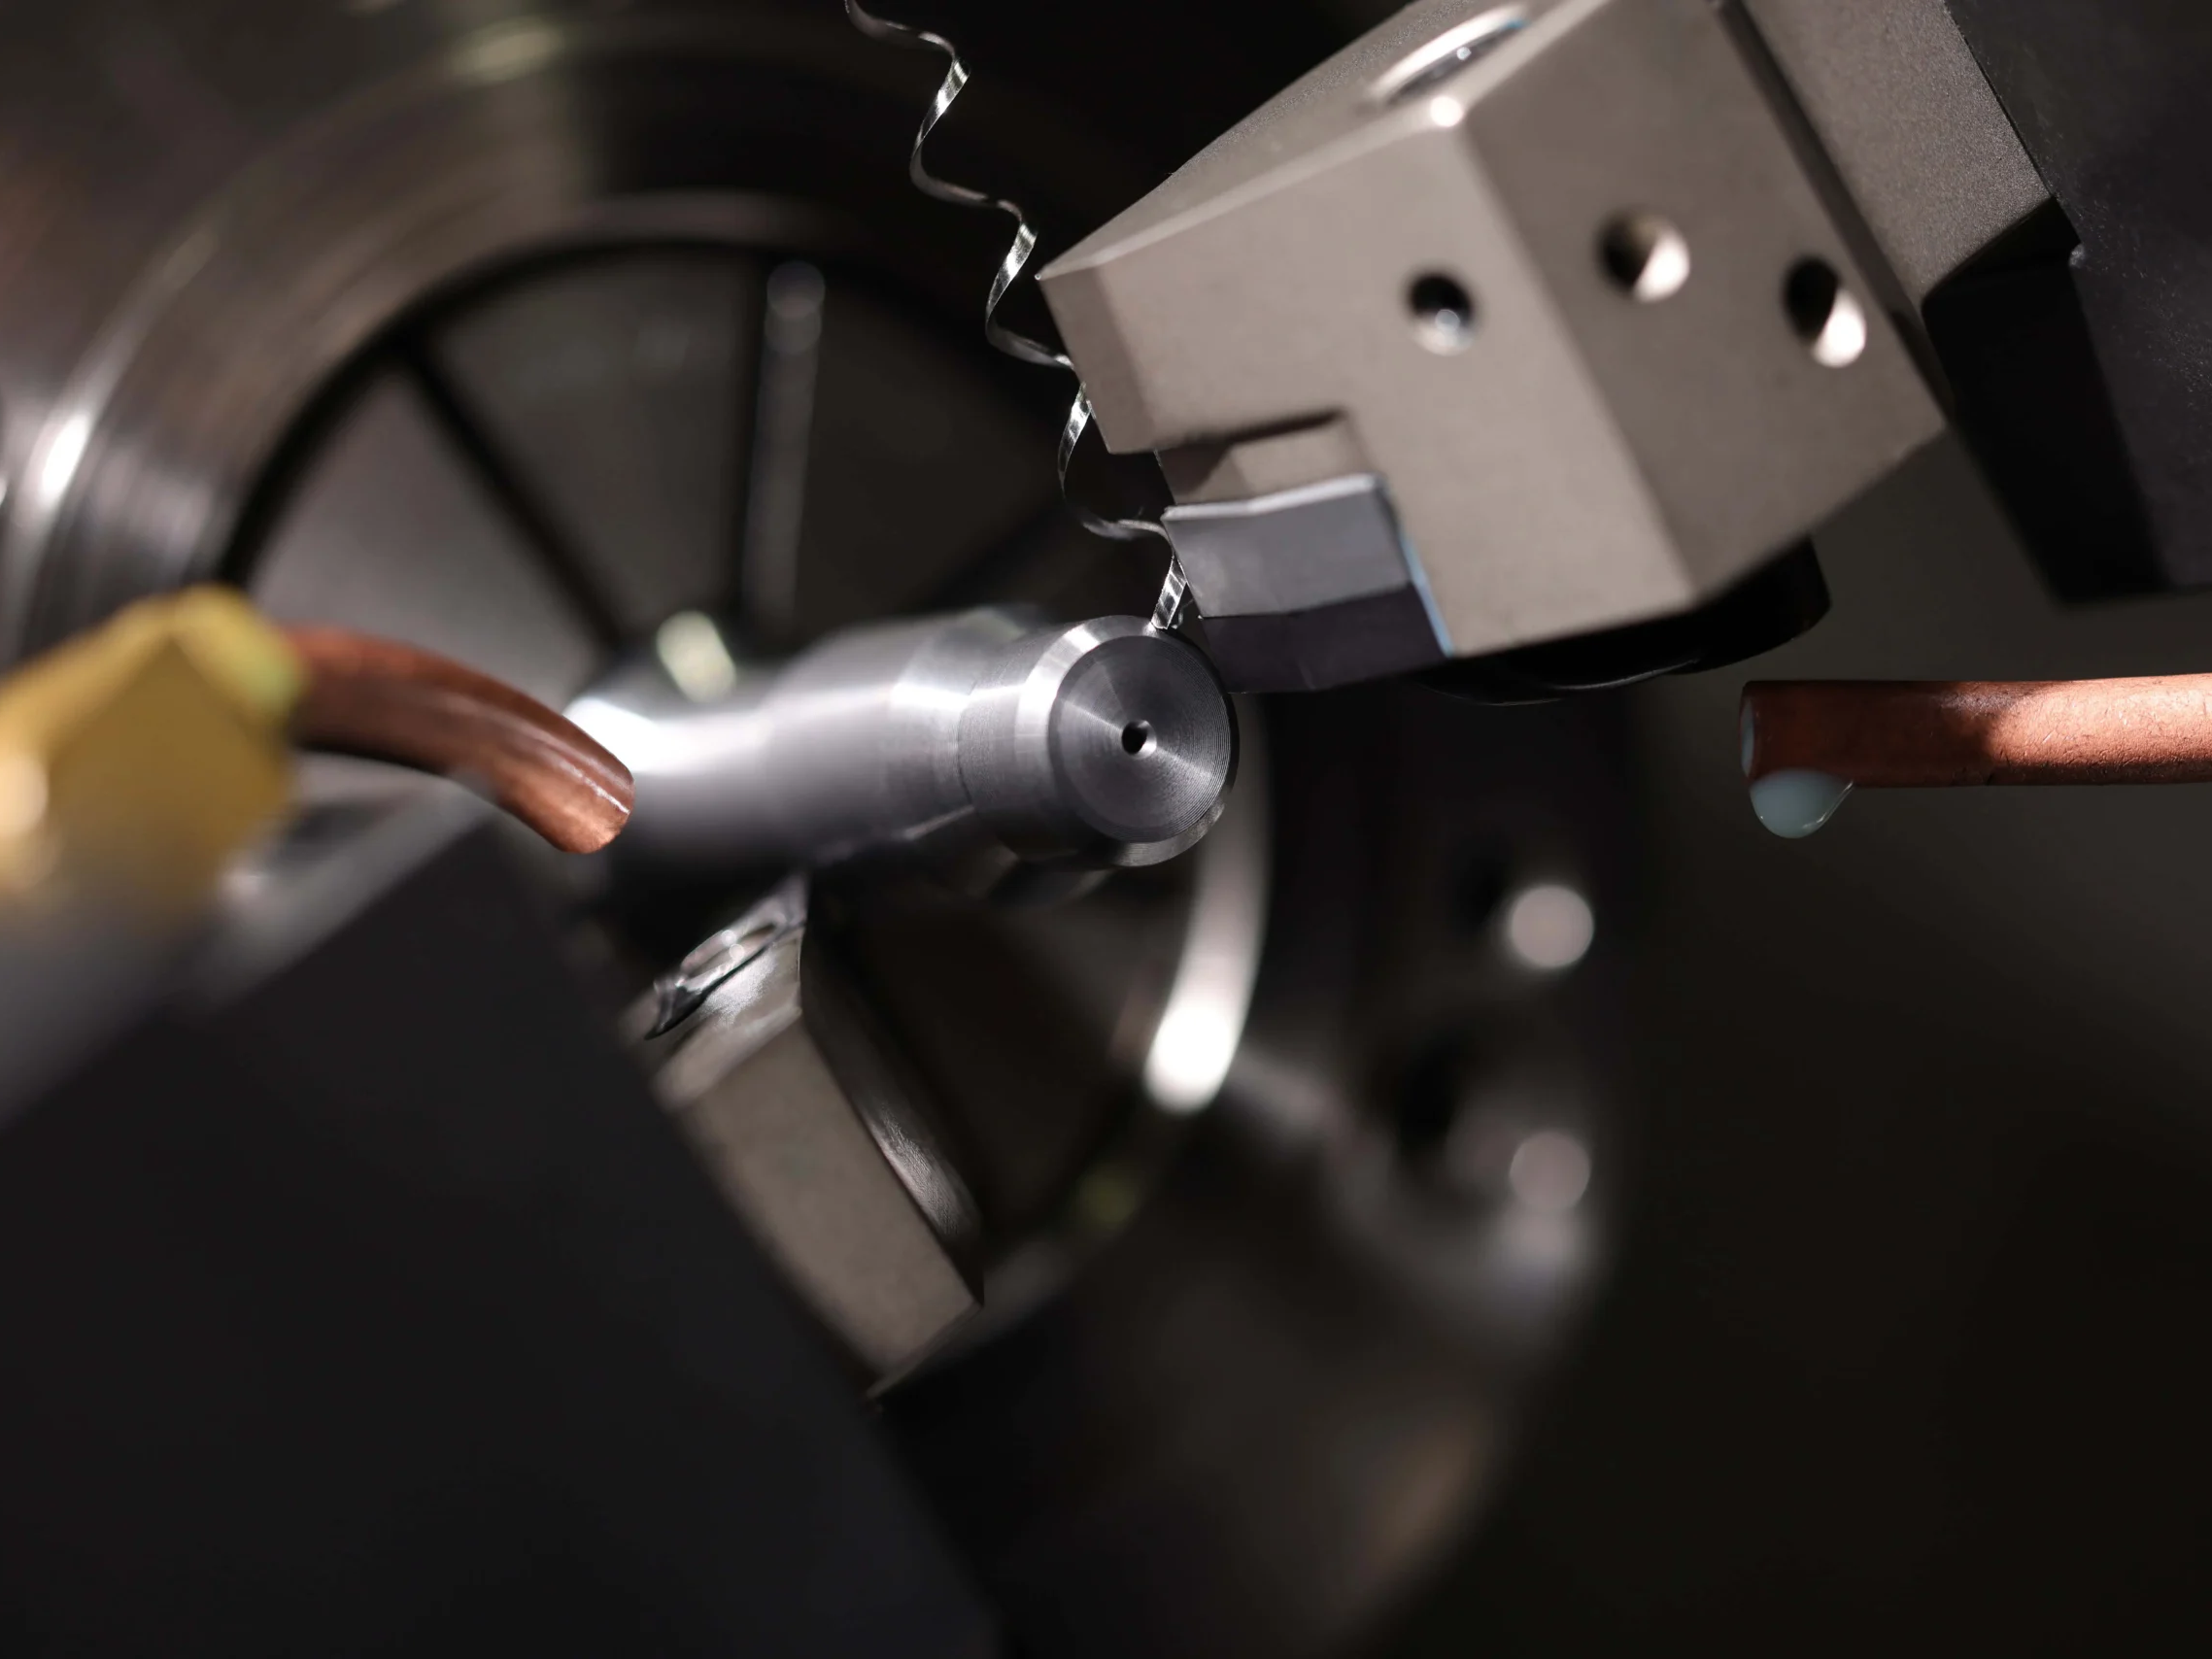 CNC turning machine cutting small metal part